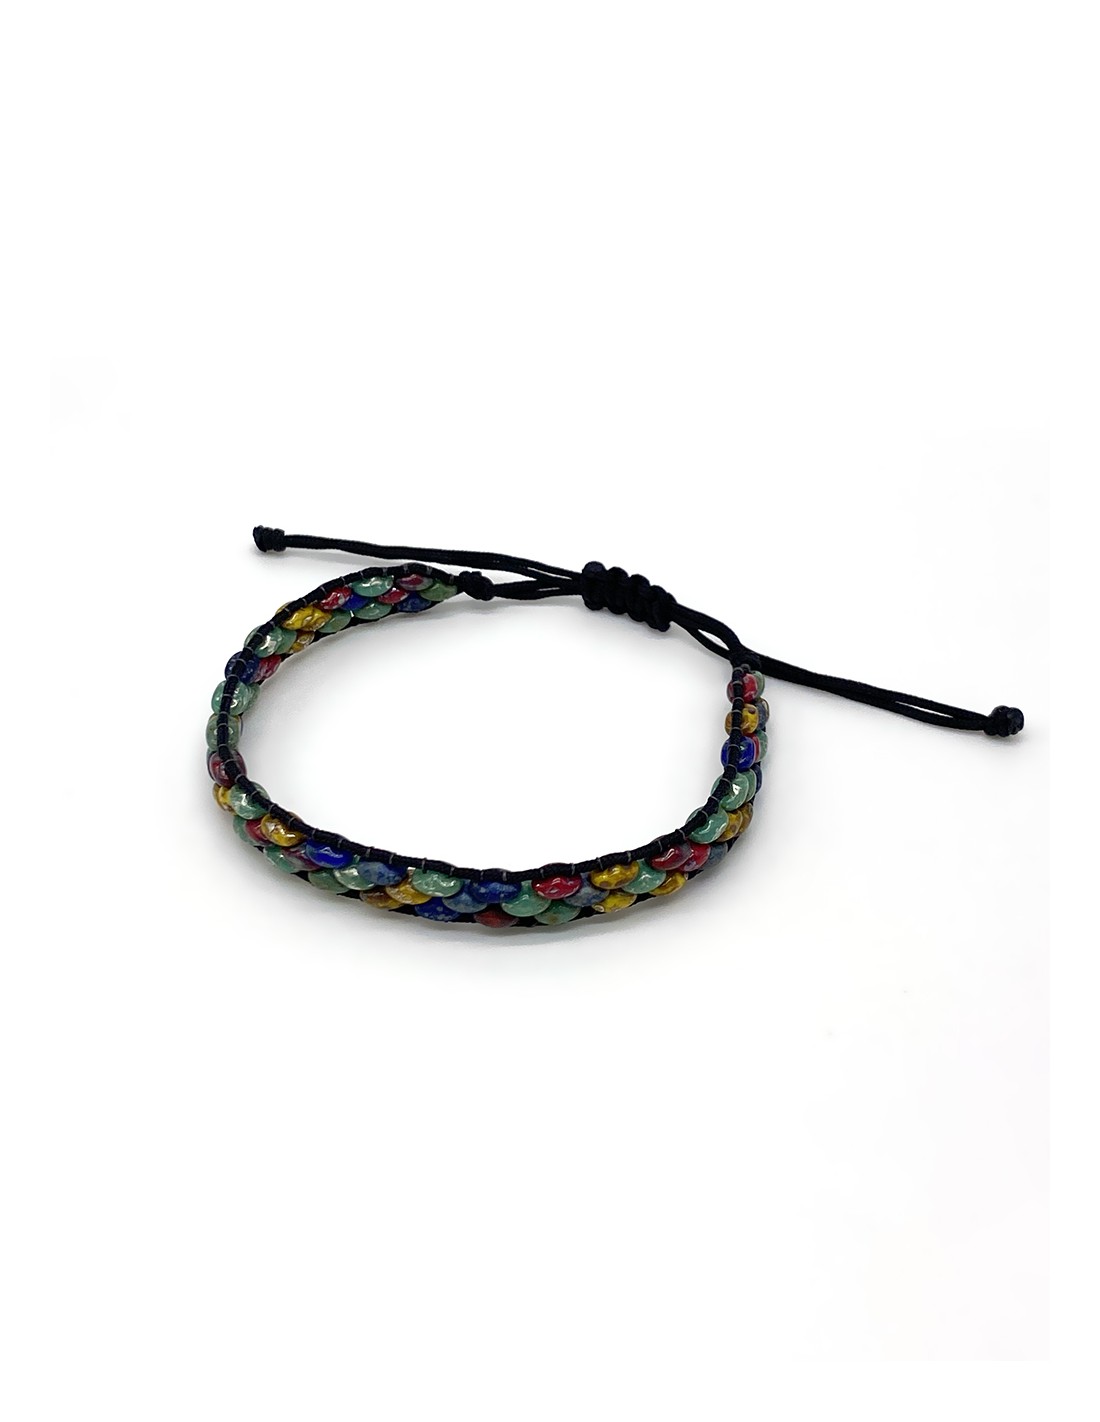 Zosimi Beads - Superduo Bracelet - Carnival